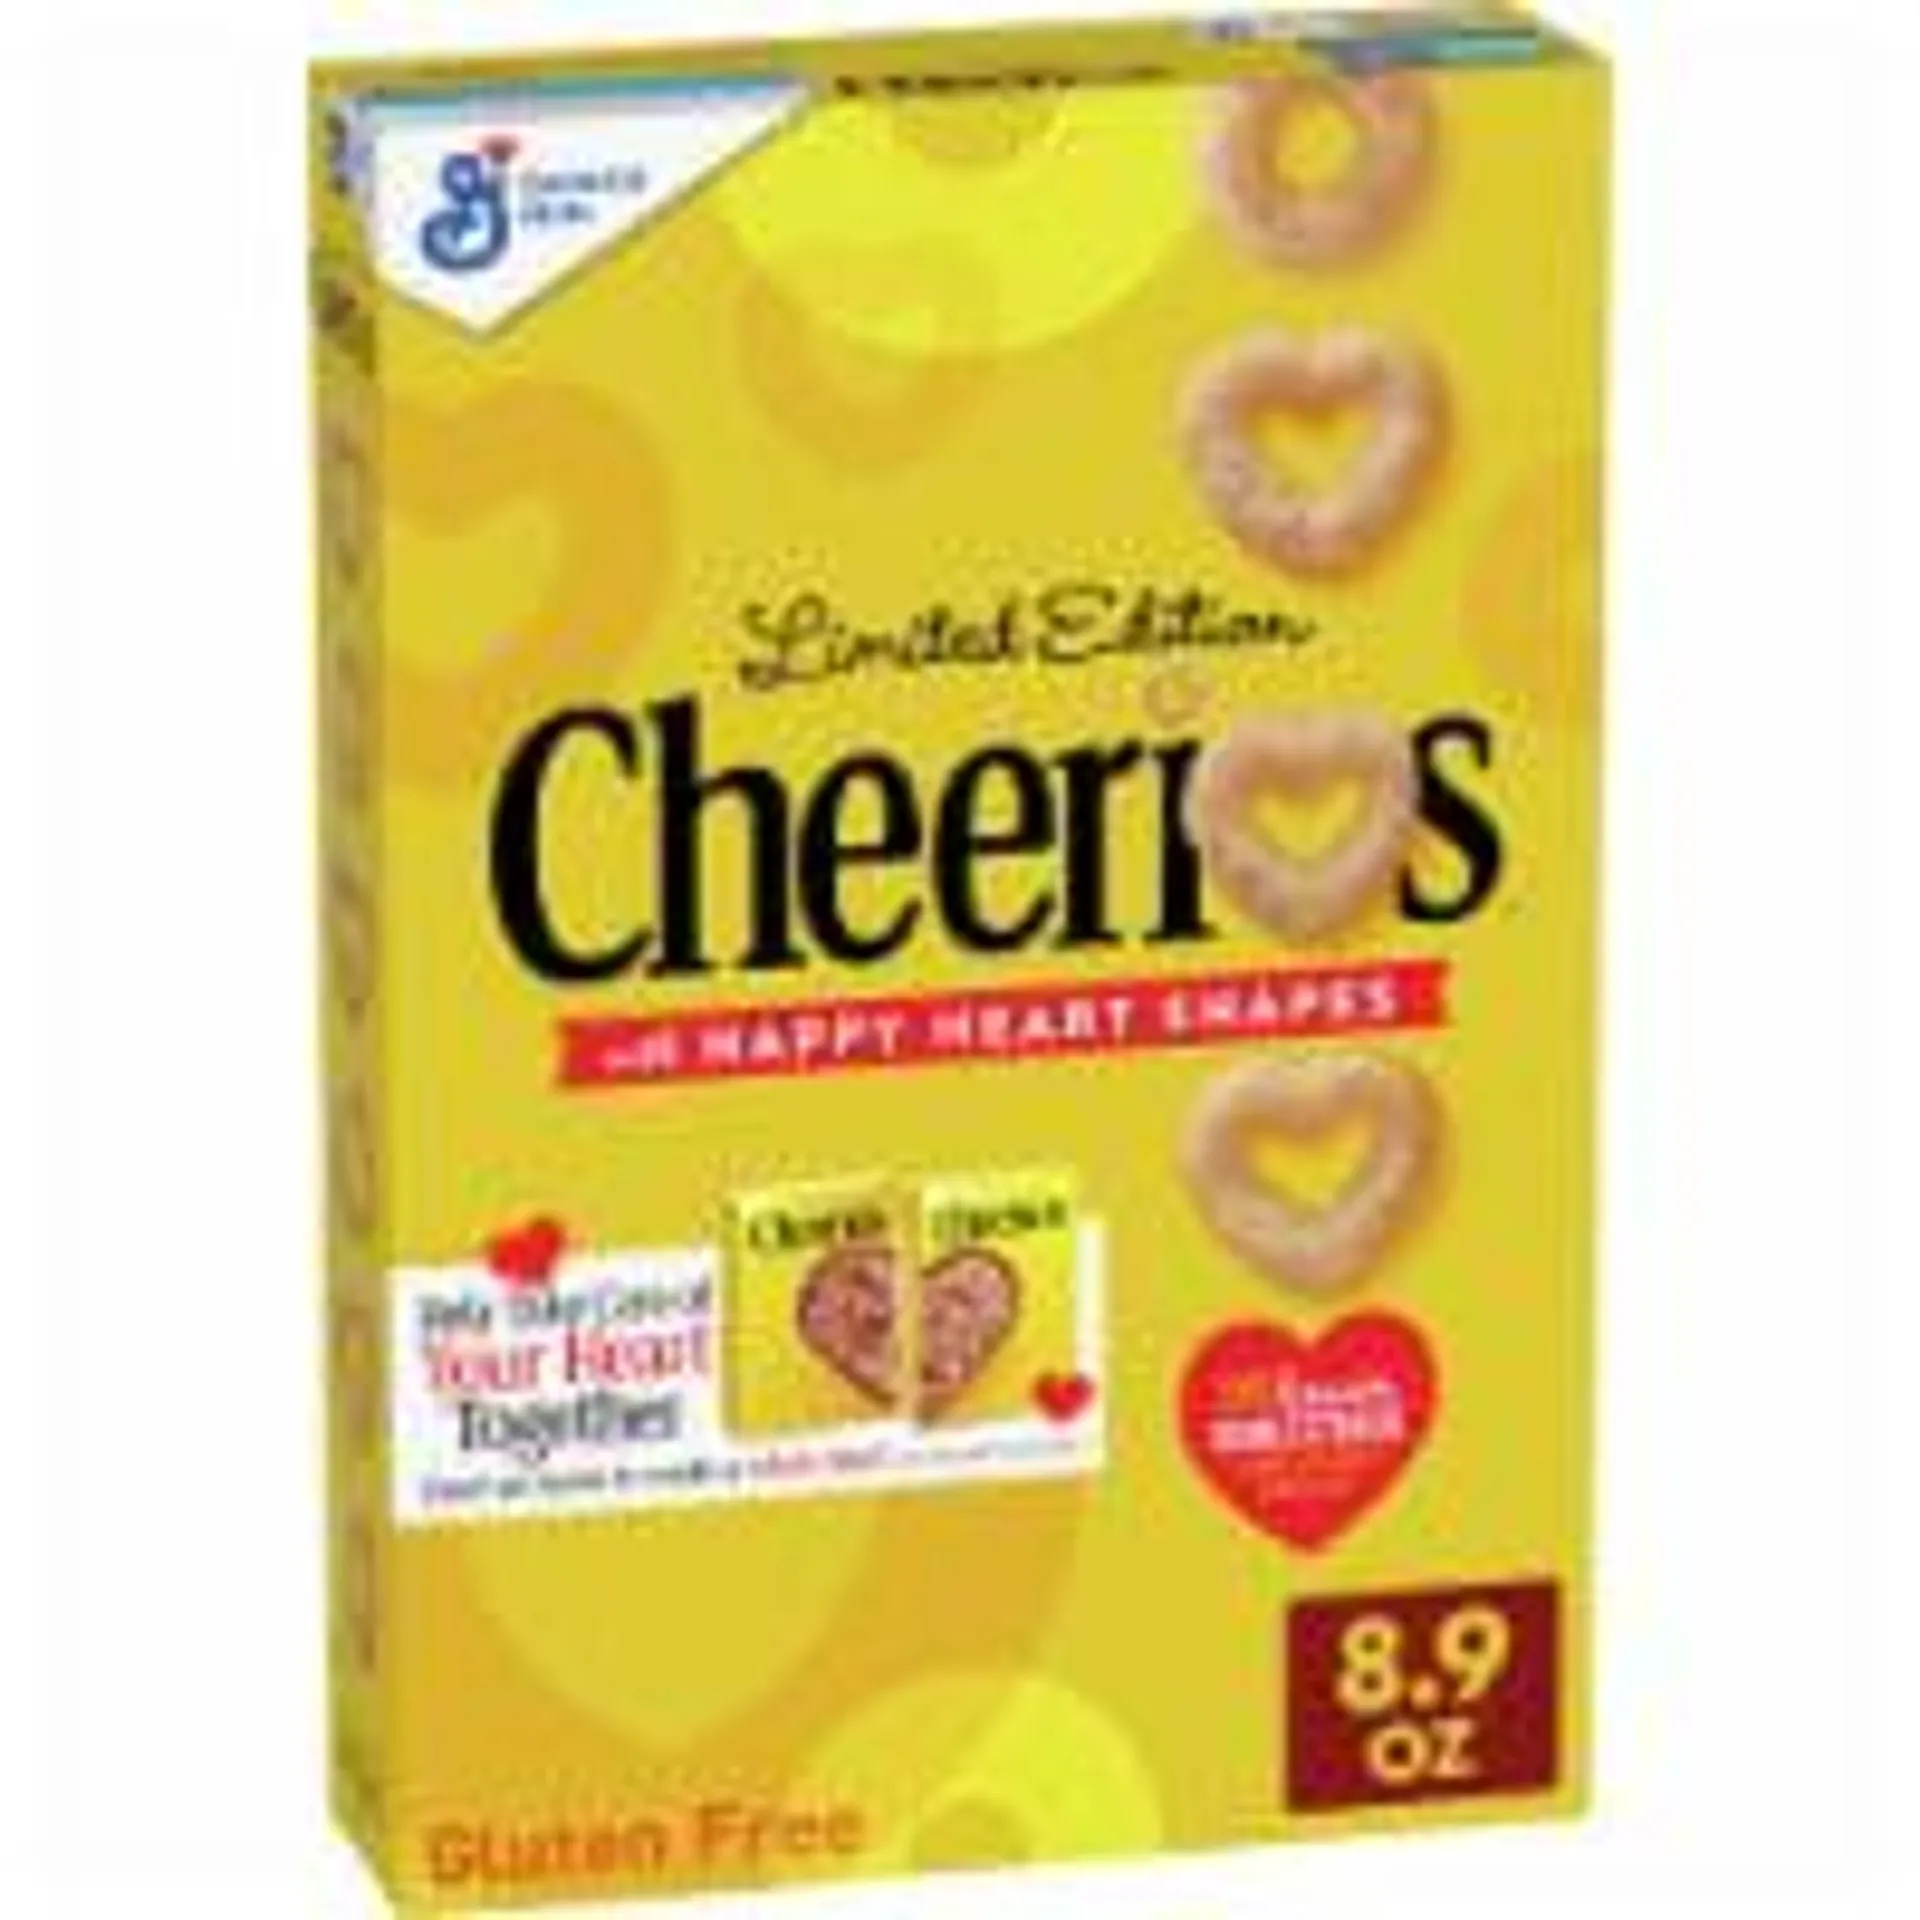 Cheerios Whole Grain Oat Gluten Free Cereal